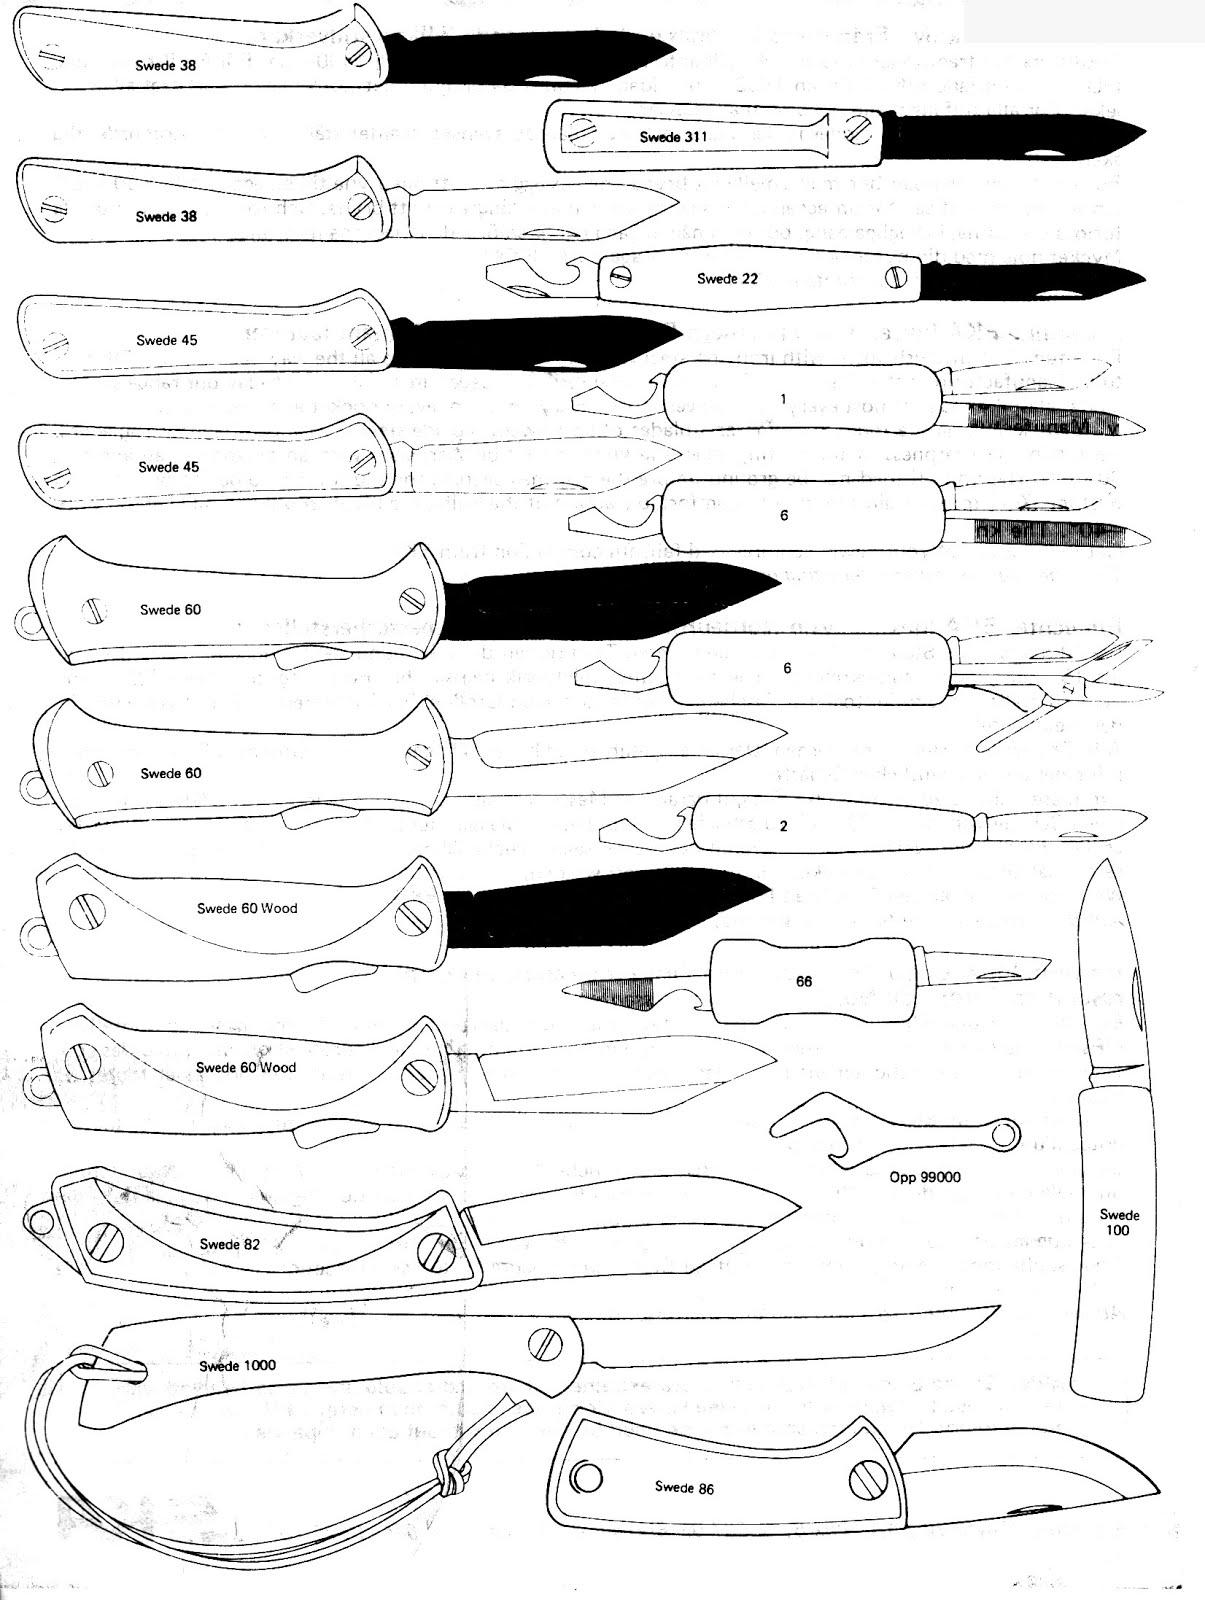 Eka-knives-1.jpg